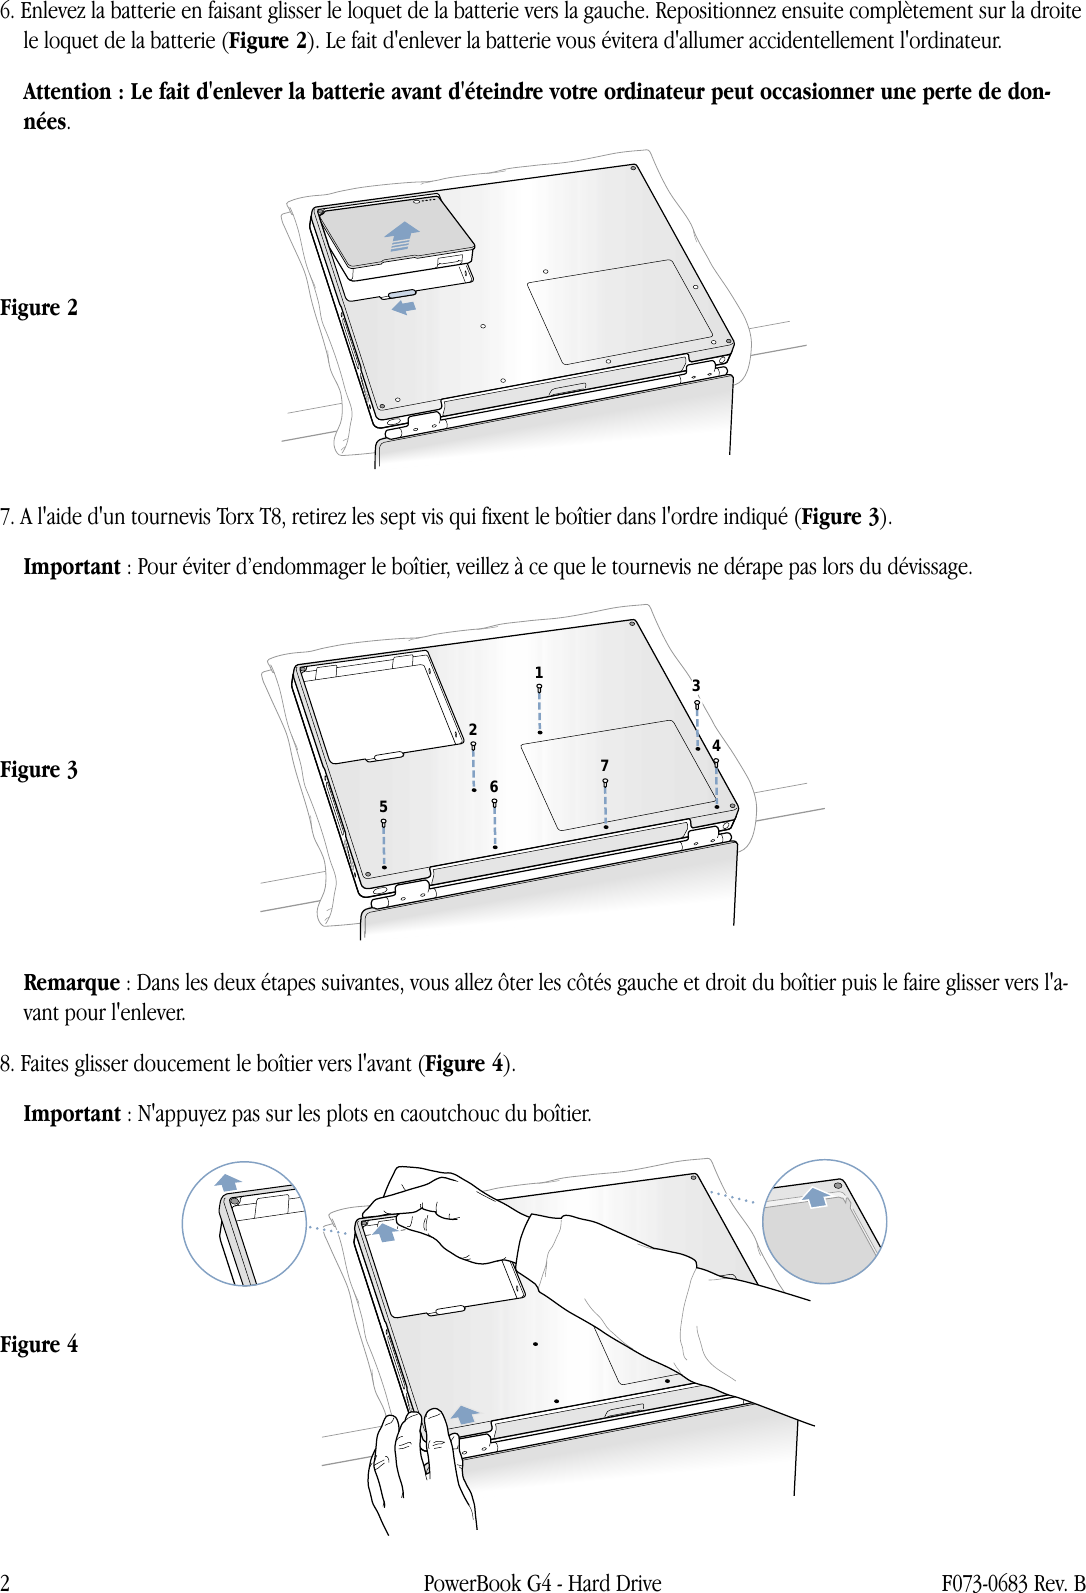 Page 2 of 8 - Apple PowerBook G4 (DVI) Hard Drive User Manual Power Book G4 (DVI, 1GHz/867MHz) - Disque Dur Instructions De Remplacement Pbg4dvi-hd-cip